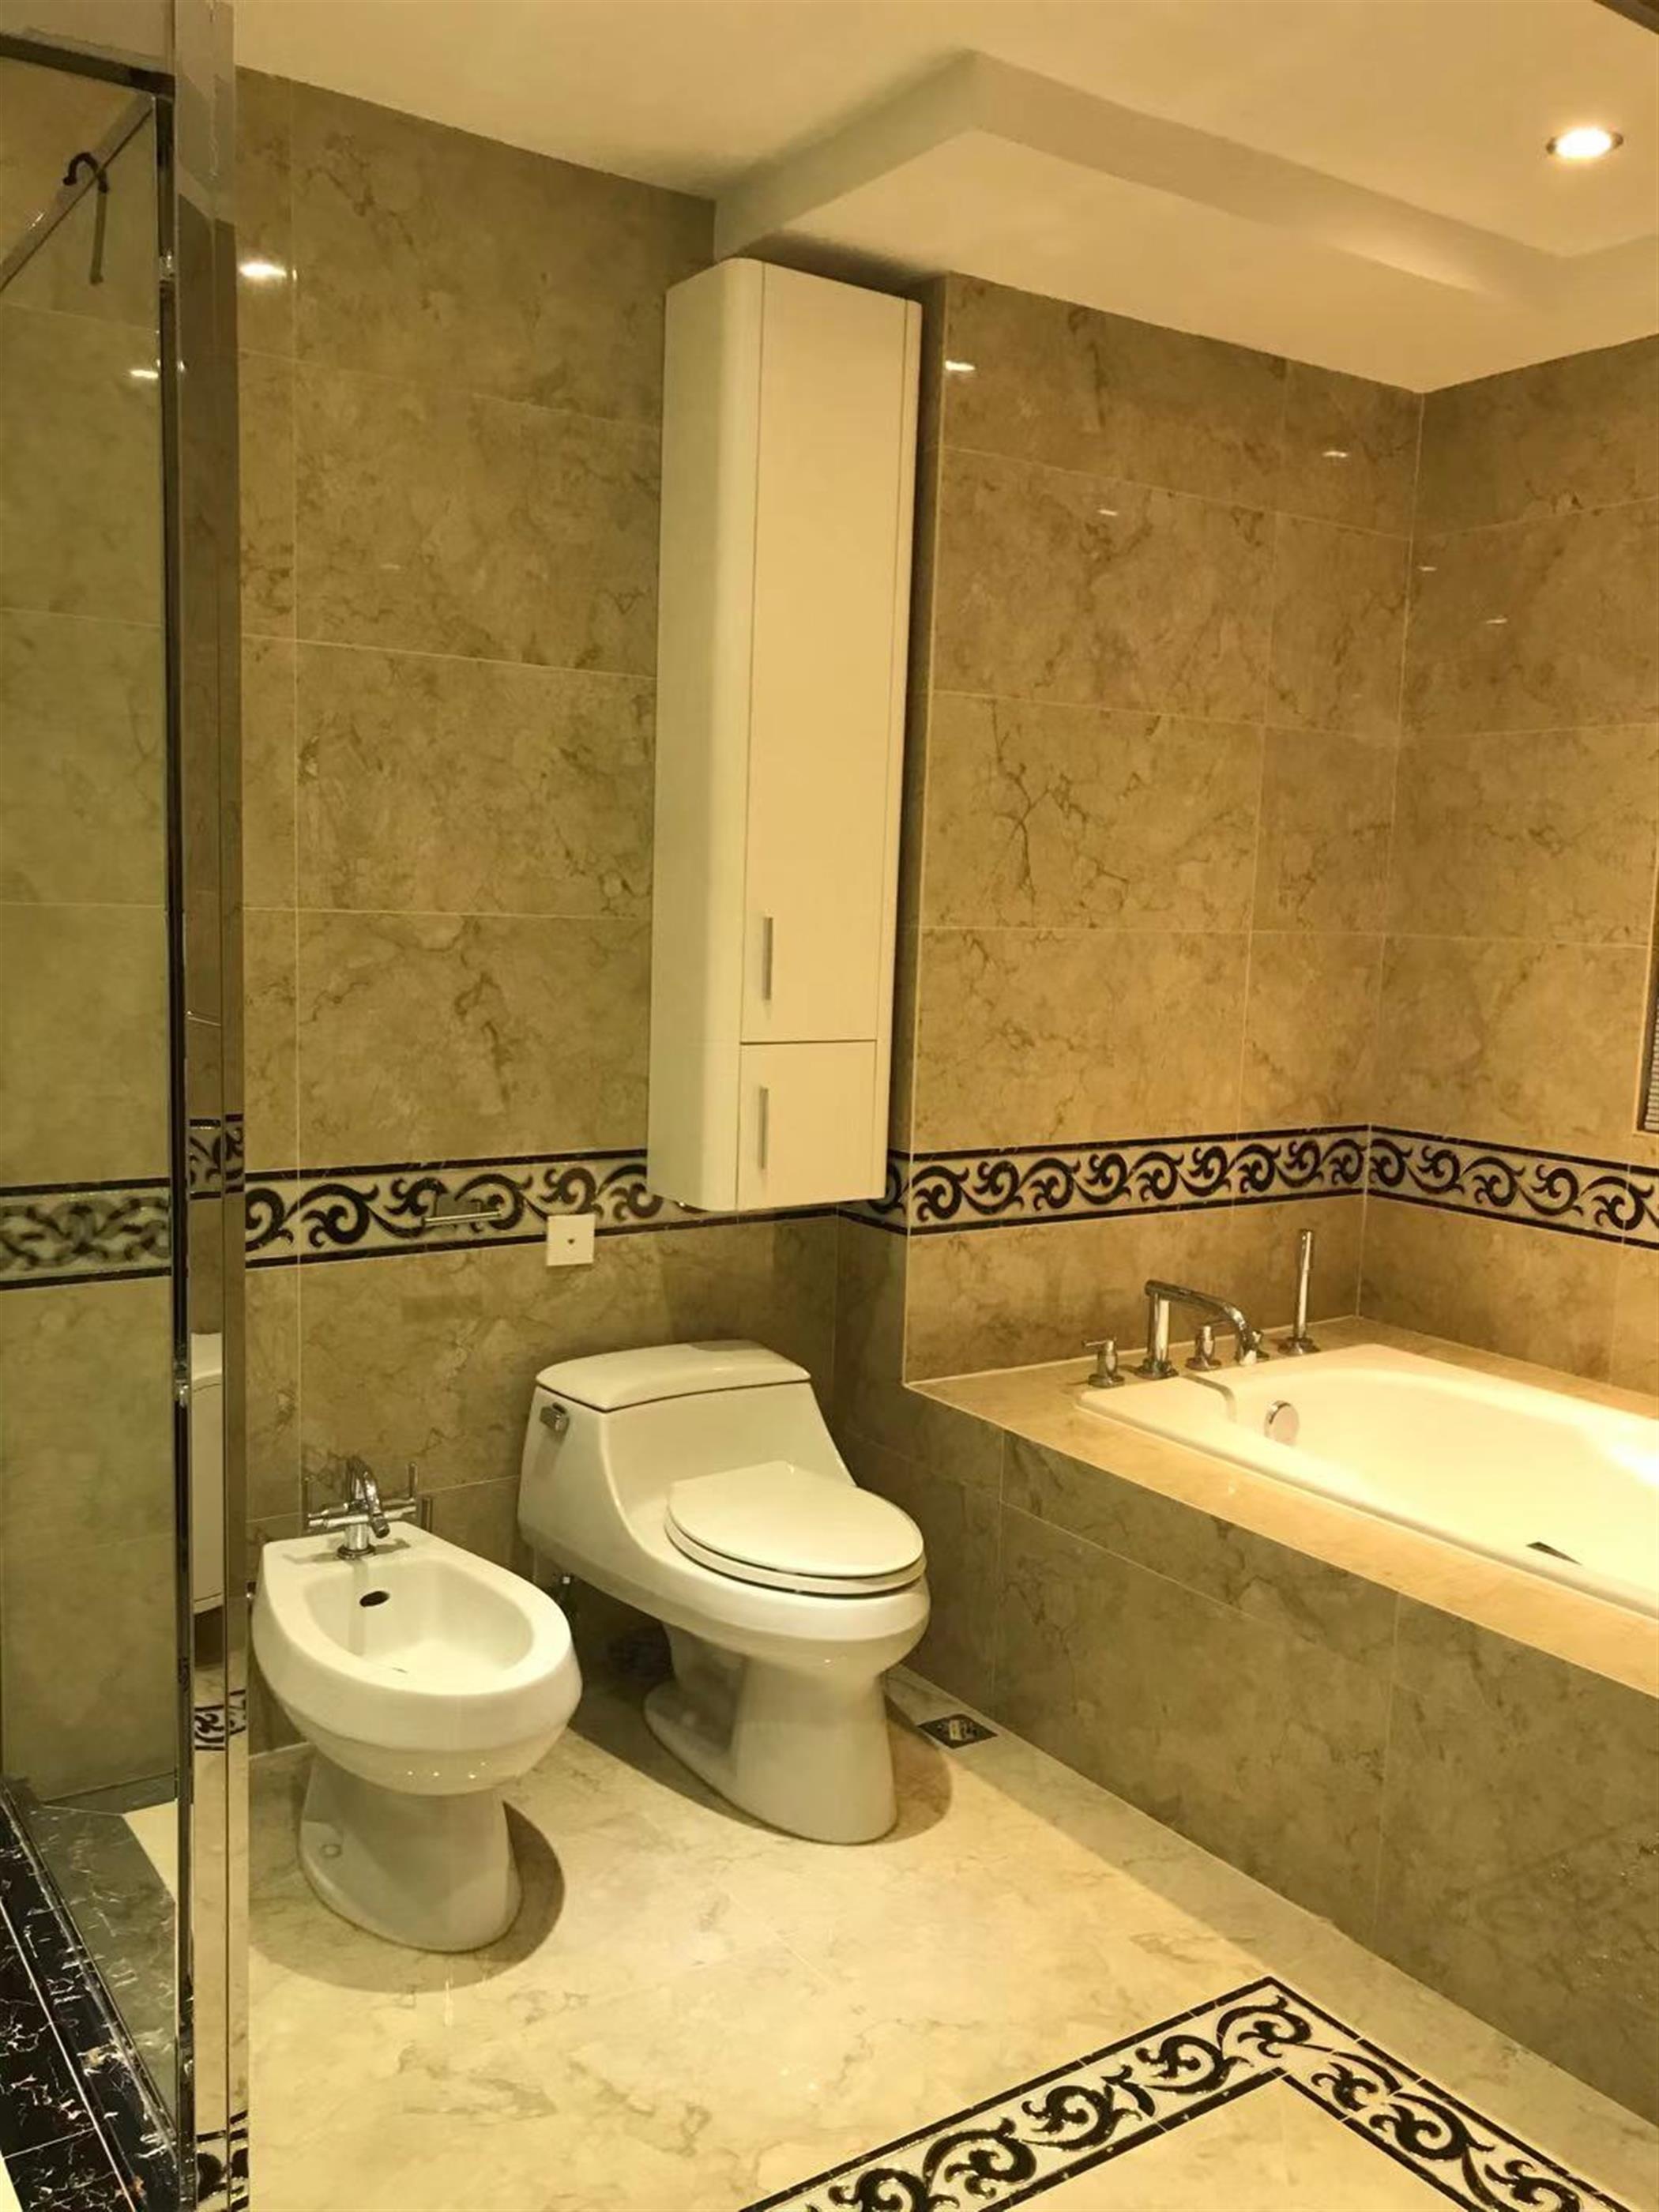 His bathroom Enormous Lux 2F+Basement Apt for Rent nr Jiangsu Rd Shanghai